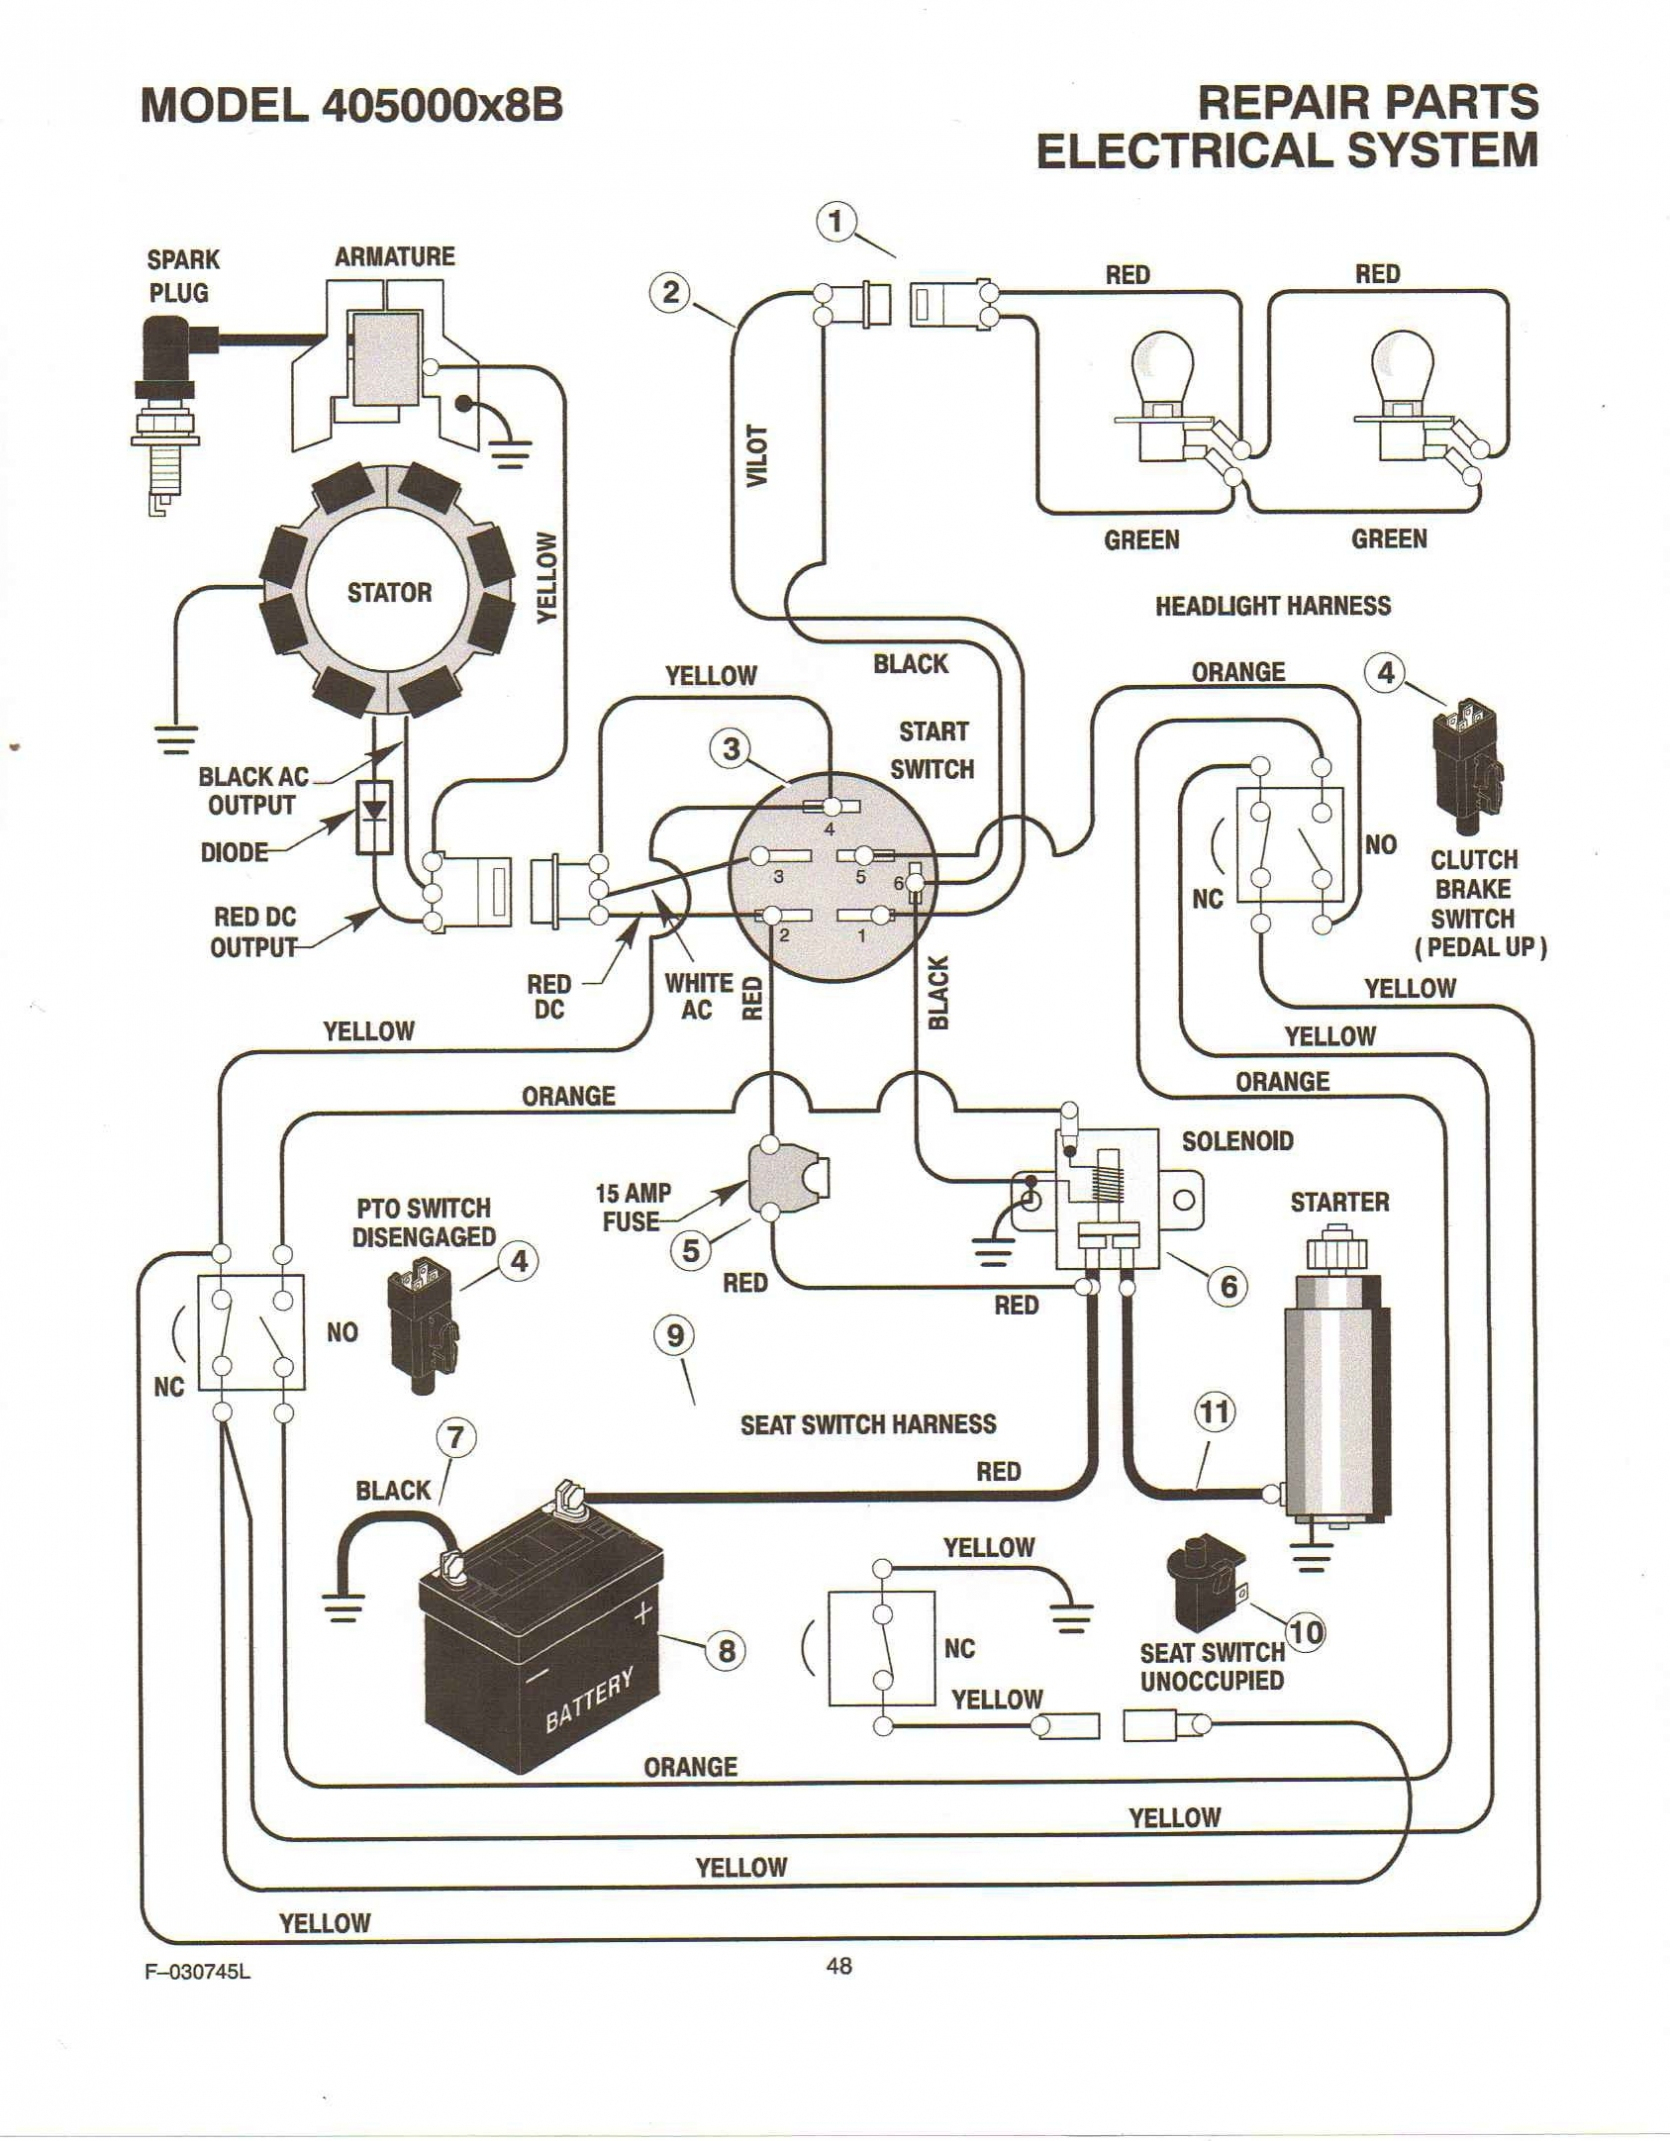 20 Hp Briggs And Stratton Wiring Diagram | Manual E-Books - Briggs And Stratton Charging System Wiring Diagram